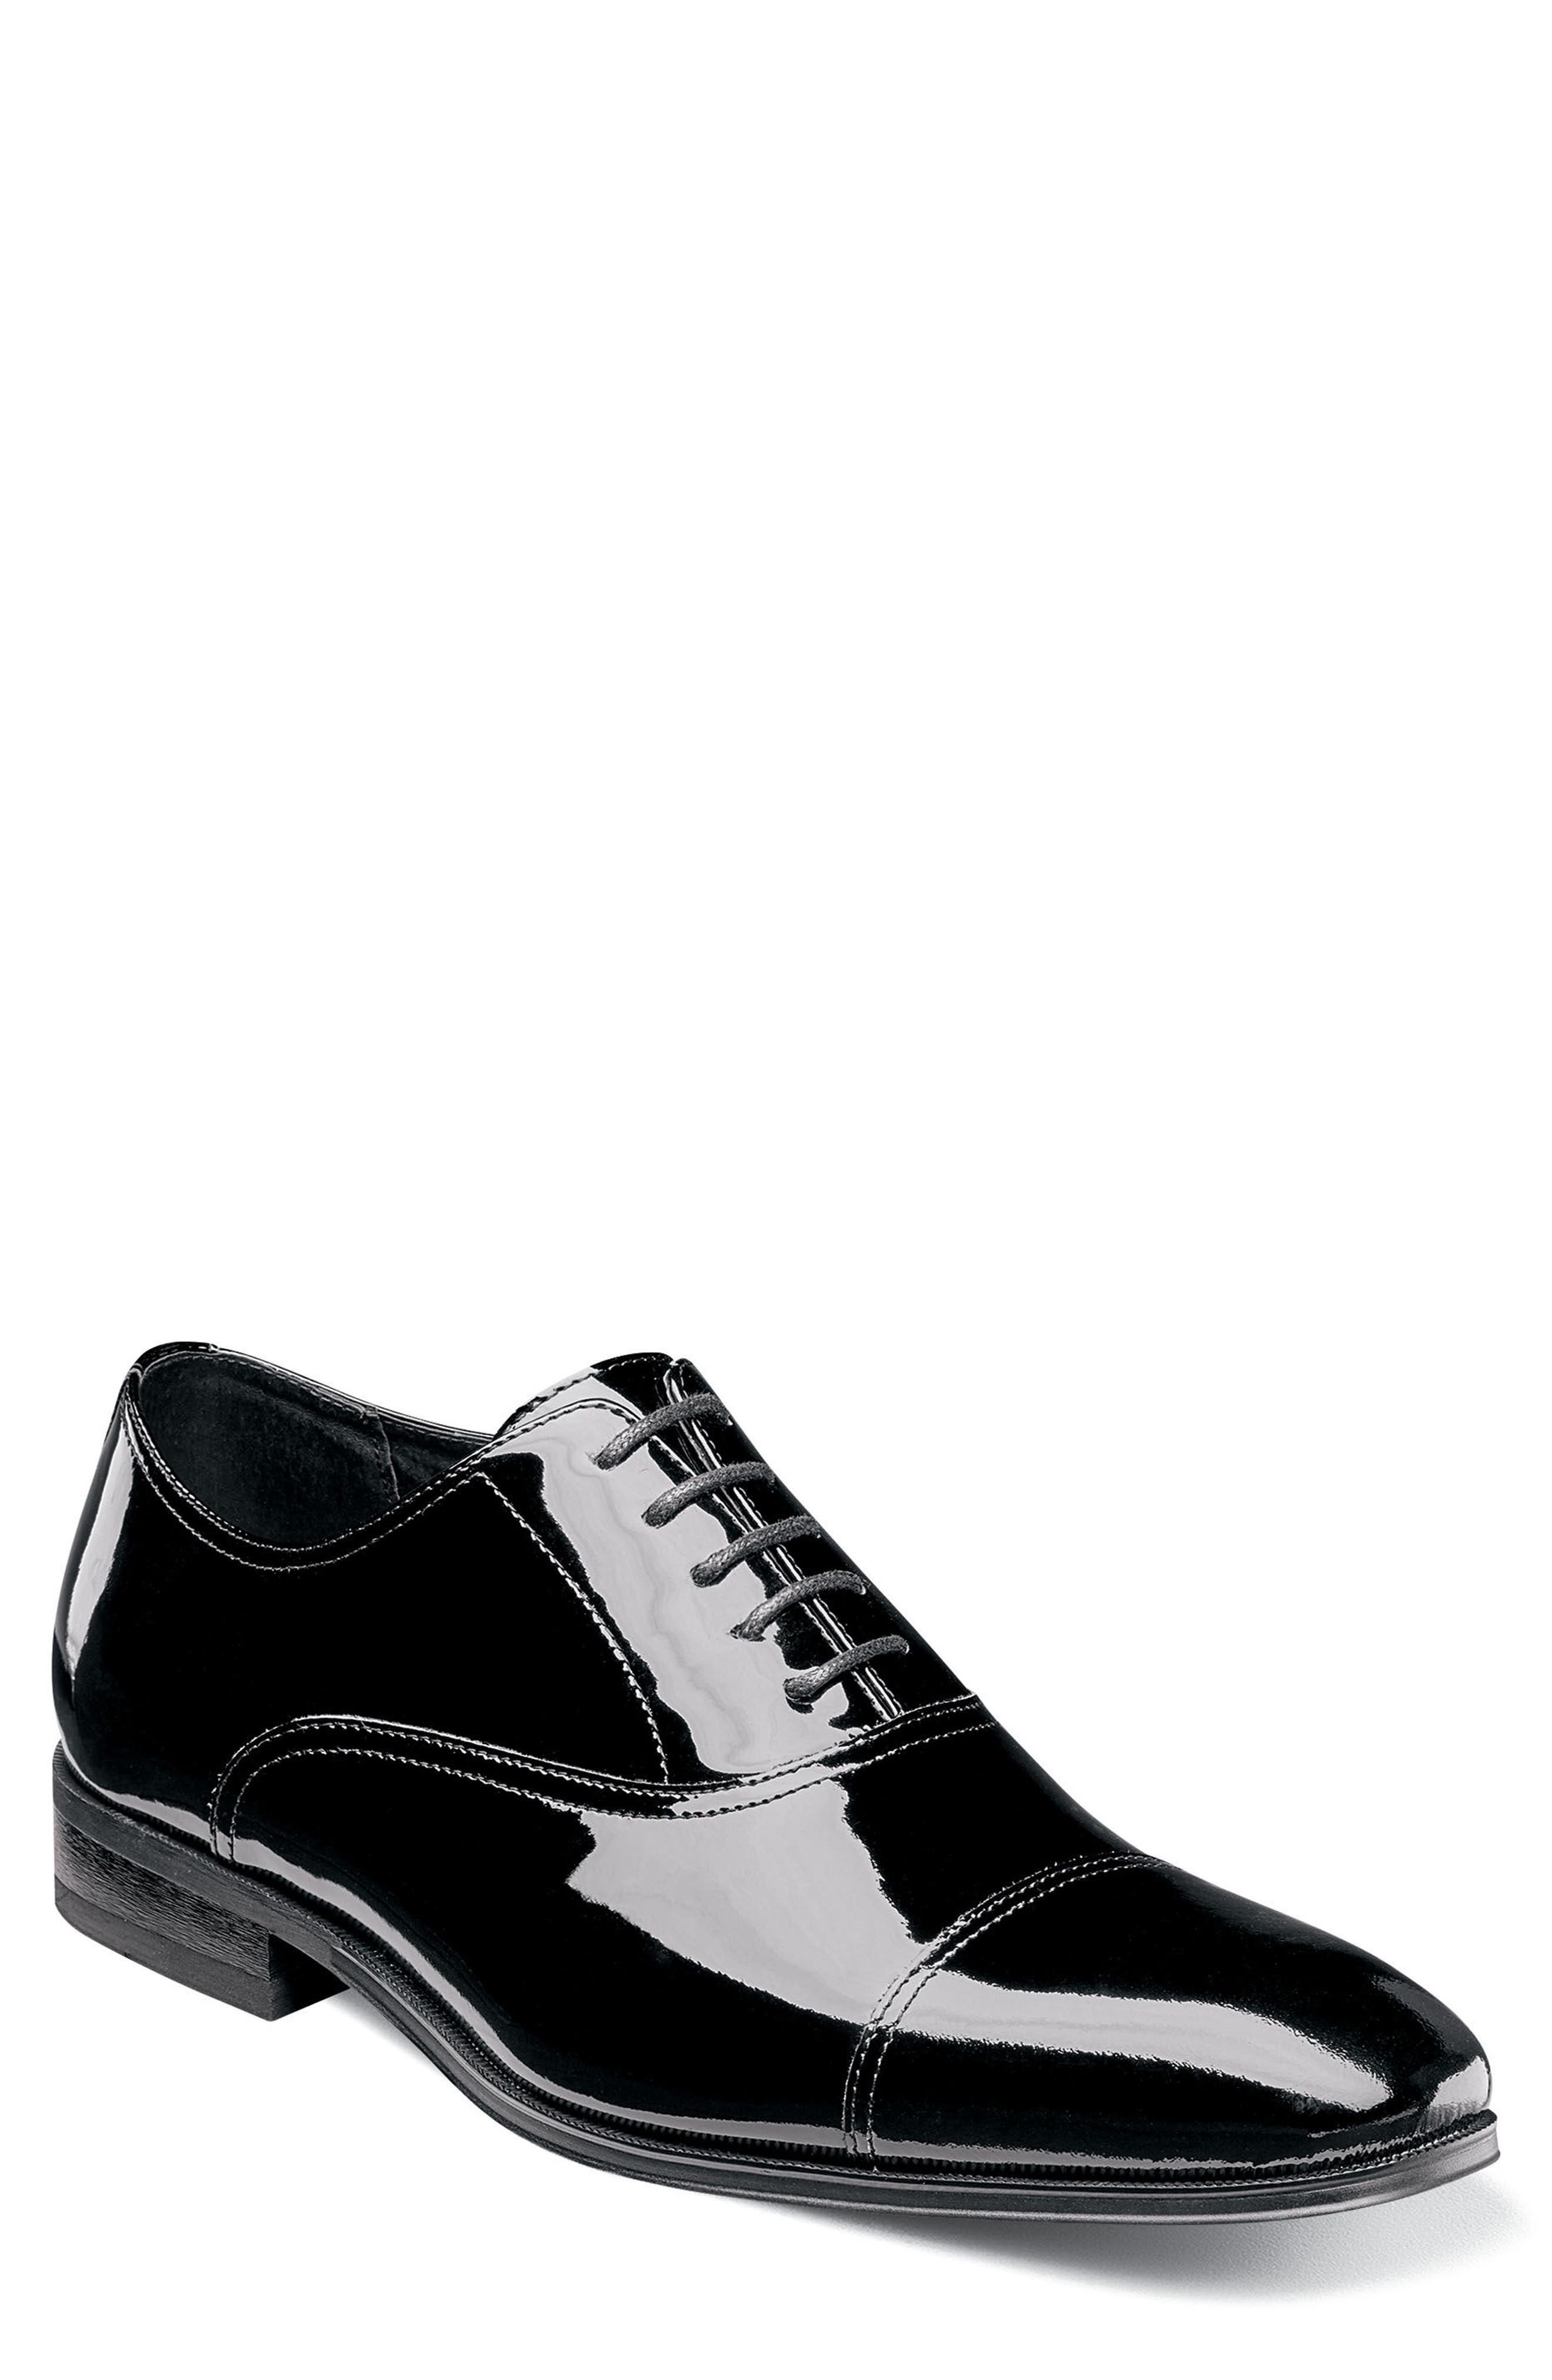 New men Lace Up Oxfords Mens Dress Tuxedo Formal Shoes Cap Toe Patent Leather 